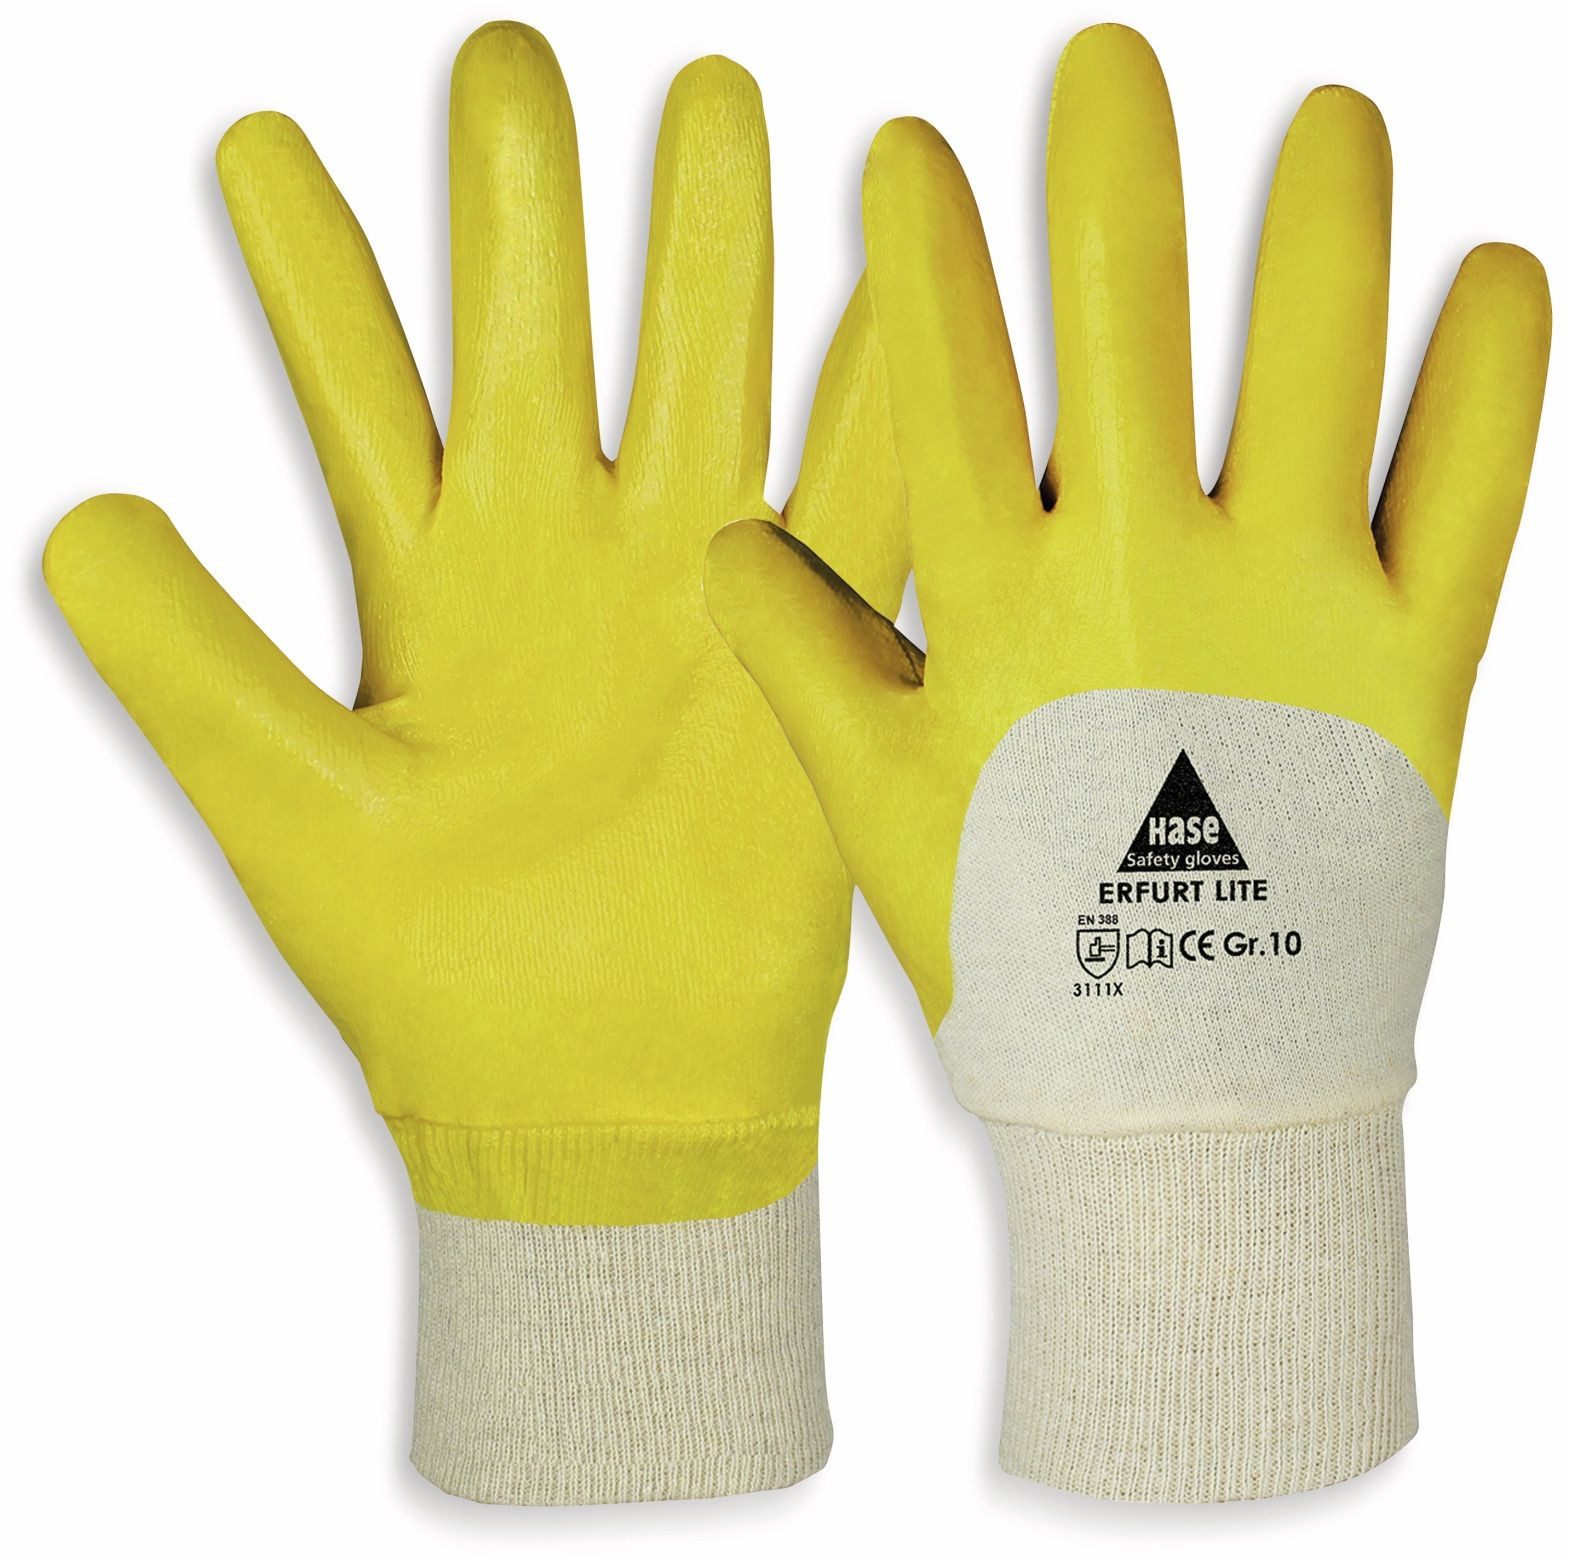 Hase Safety Gloves Arbeitshandschuhe HASE SAFETY GLOVES Arbeitshandschuhe, Nitril